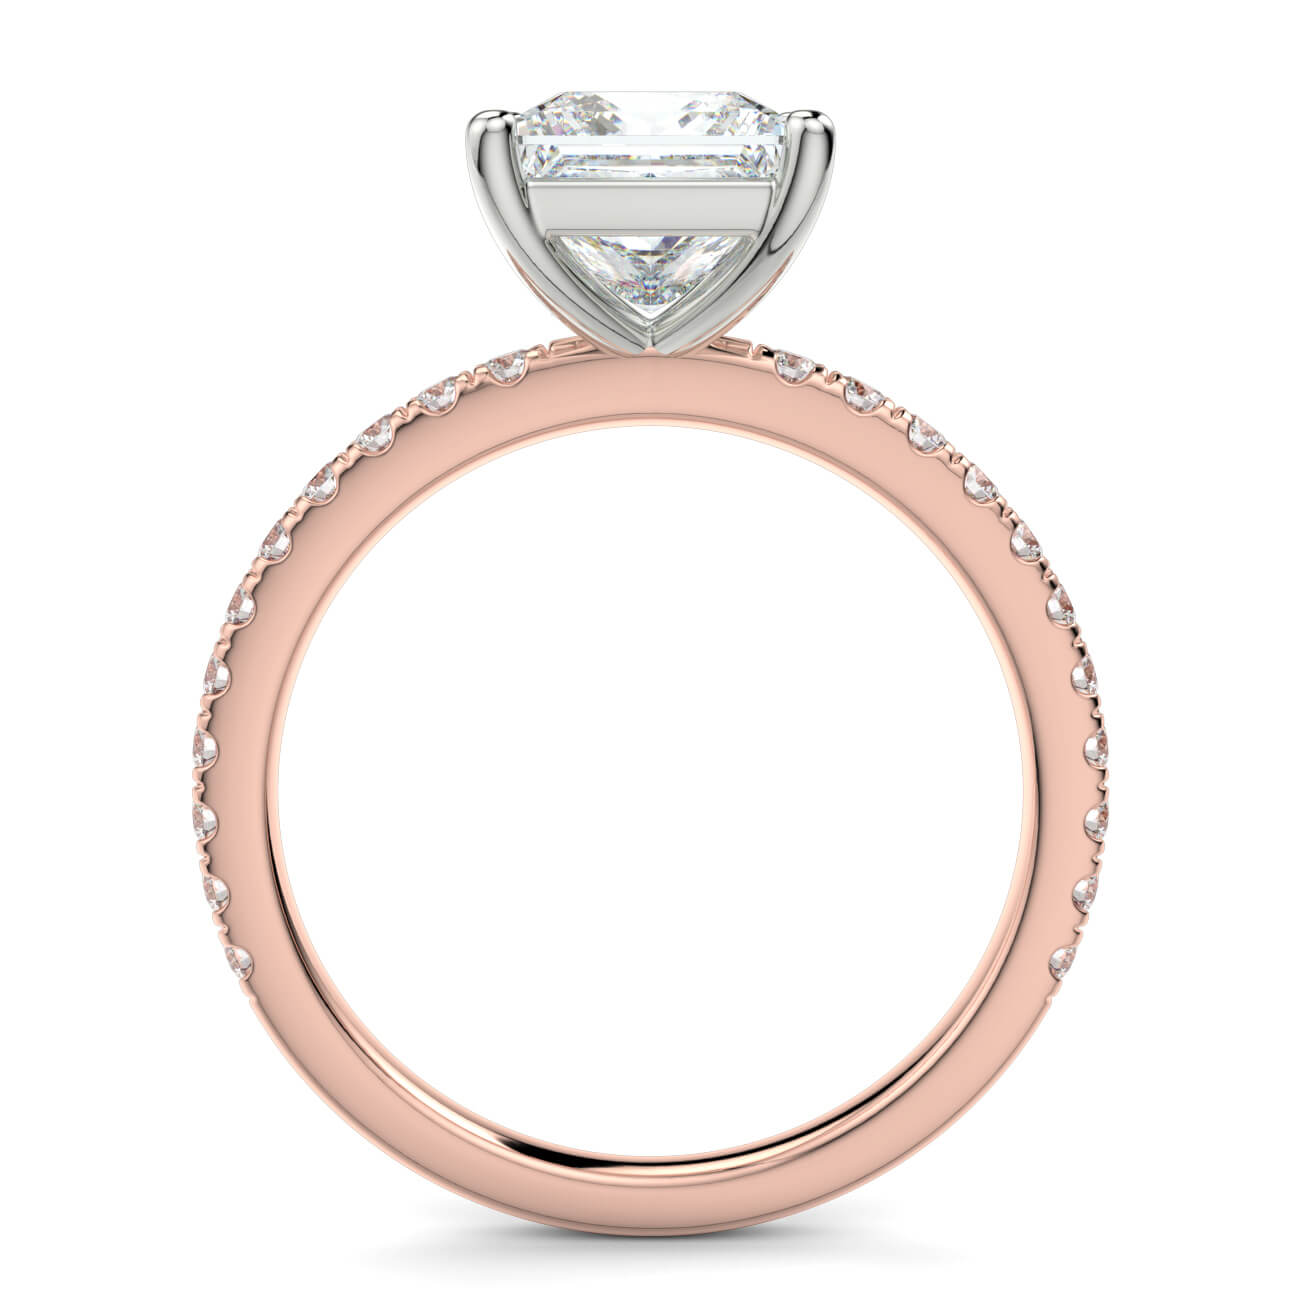 Classic Princess Cut Pavé Diamond Engagement Ring in 18k Rose and White Gold – Australian Diamond Network